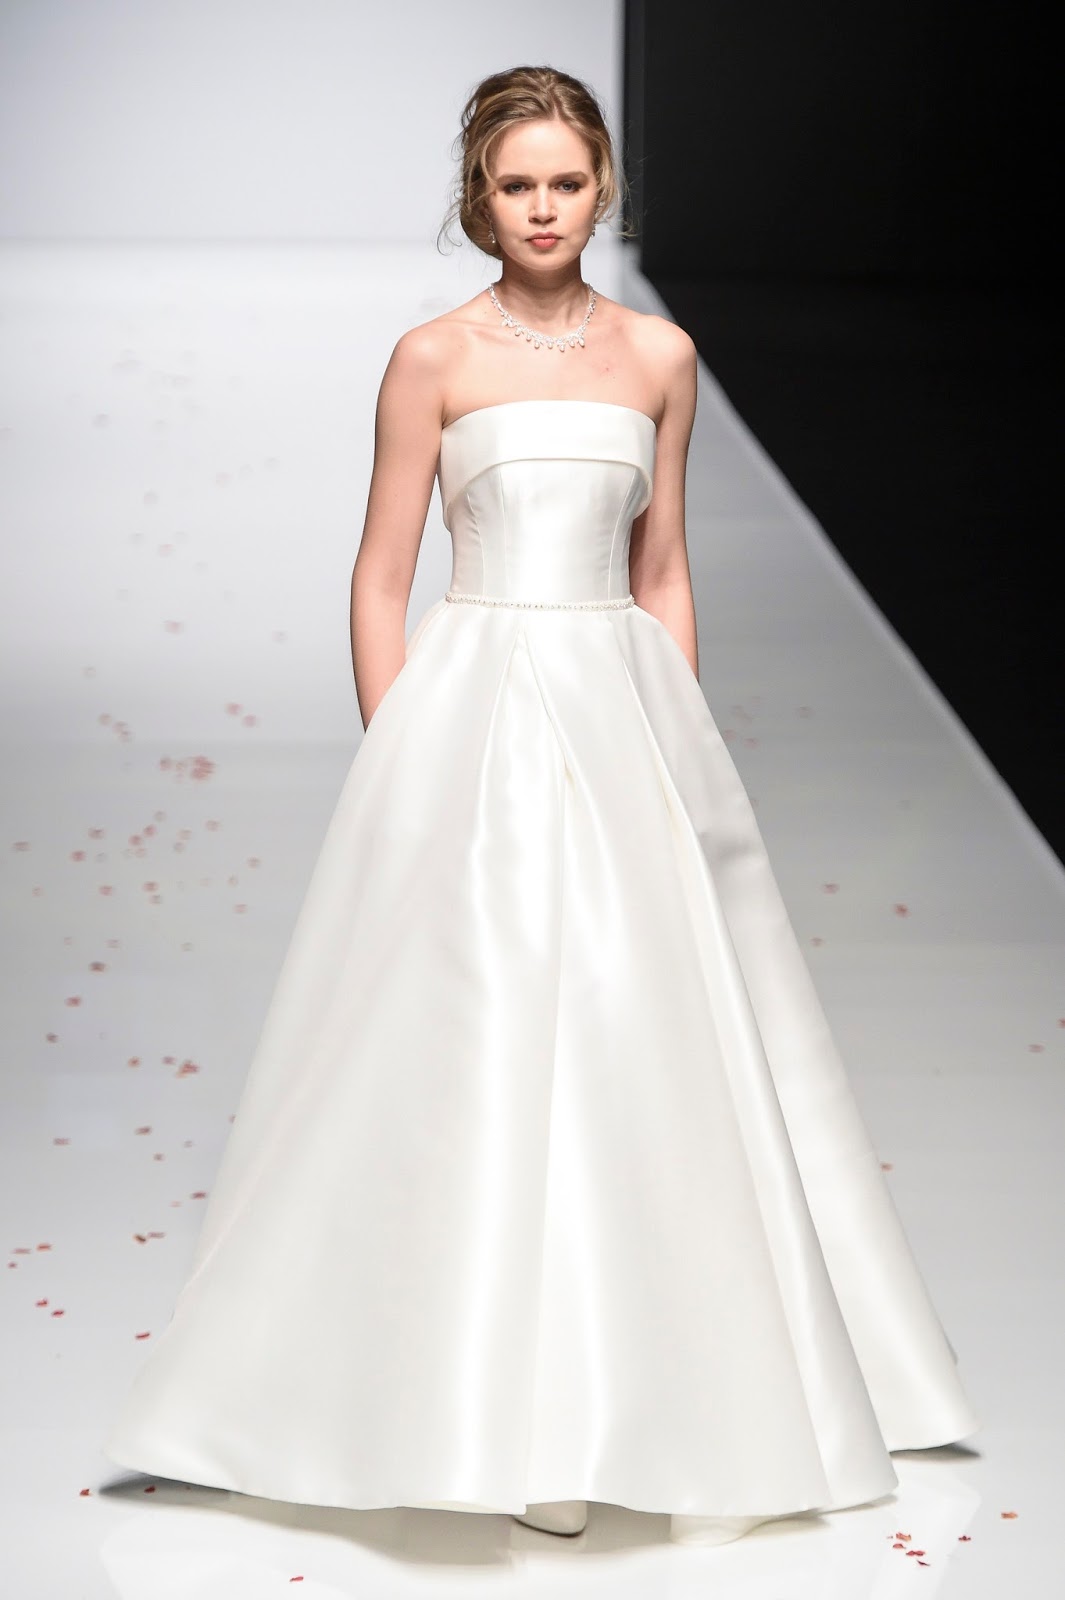 Wedding Gown Elegance March 28, 2018 | ZsaZsa Bellagio - Like No Other